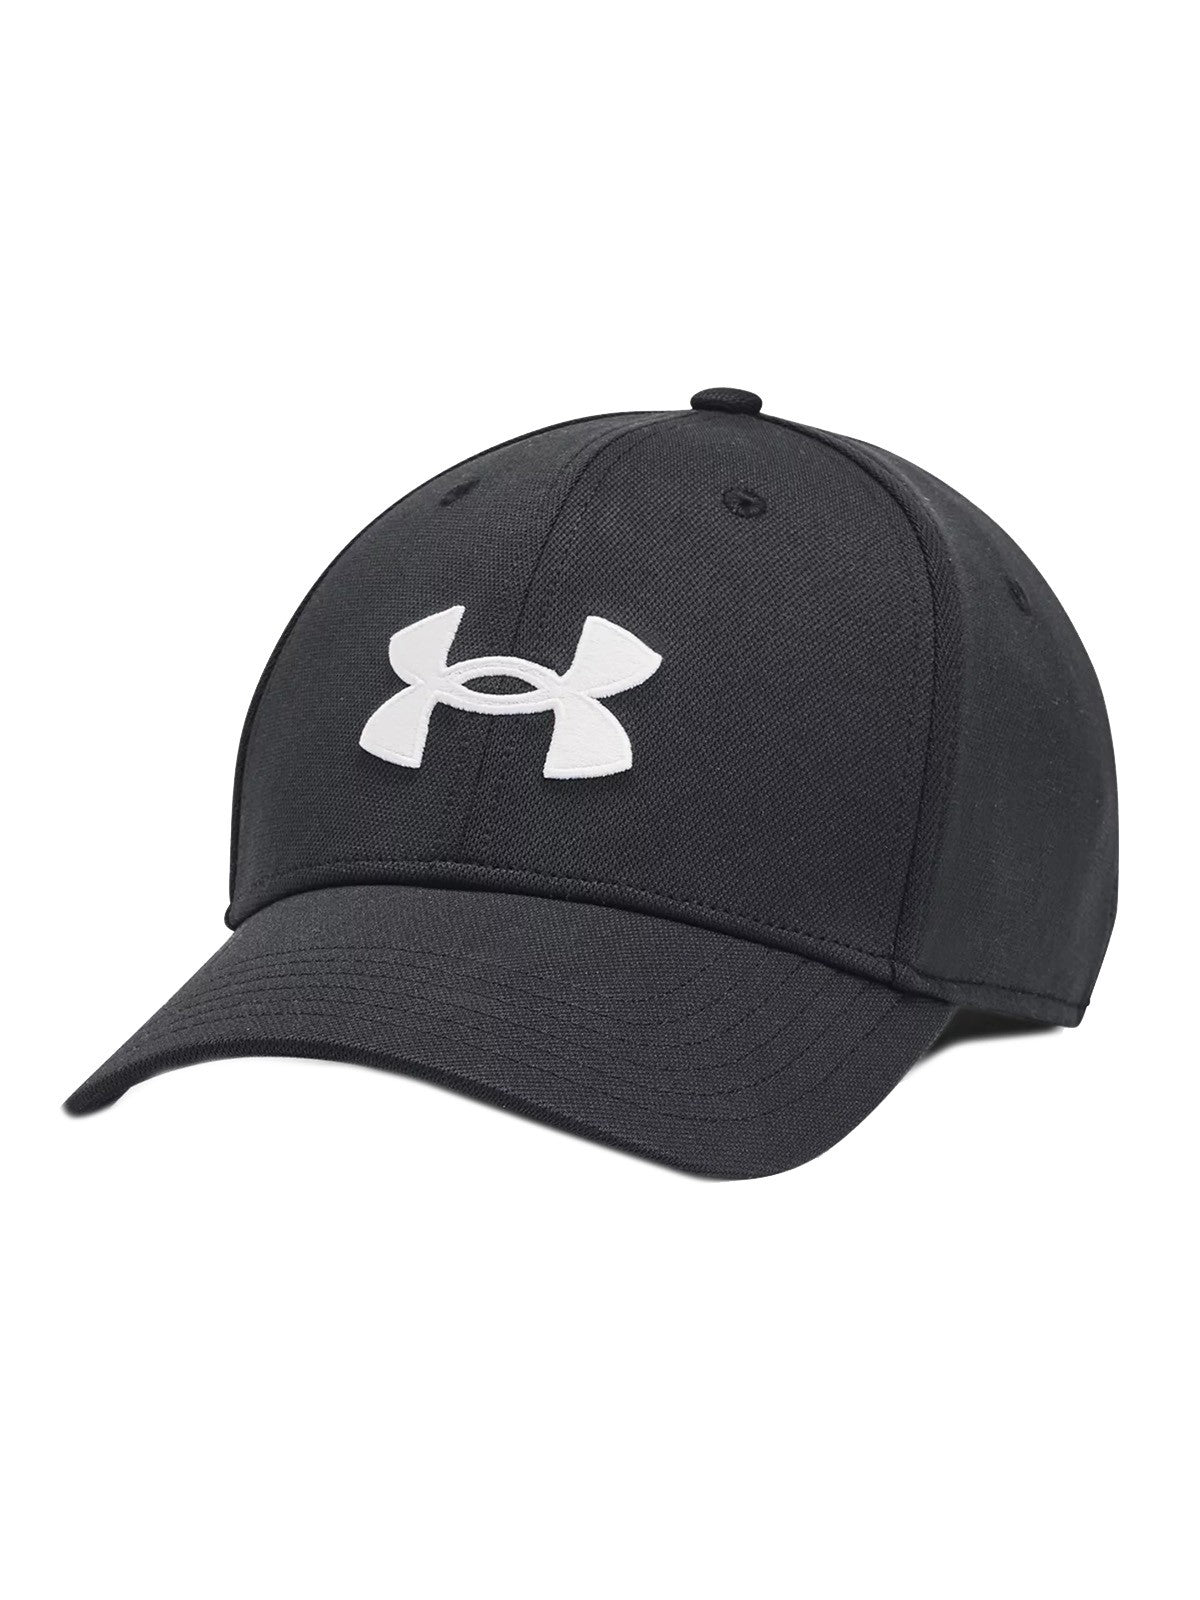 Cappellini da baseball Unisex Under Armour - Ua Blitzing Adjustable Hat - Nero